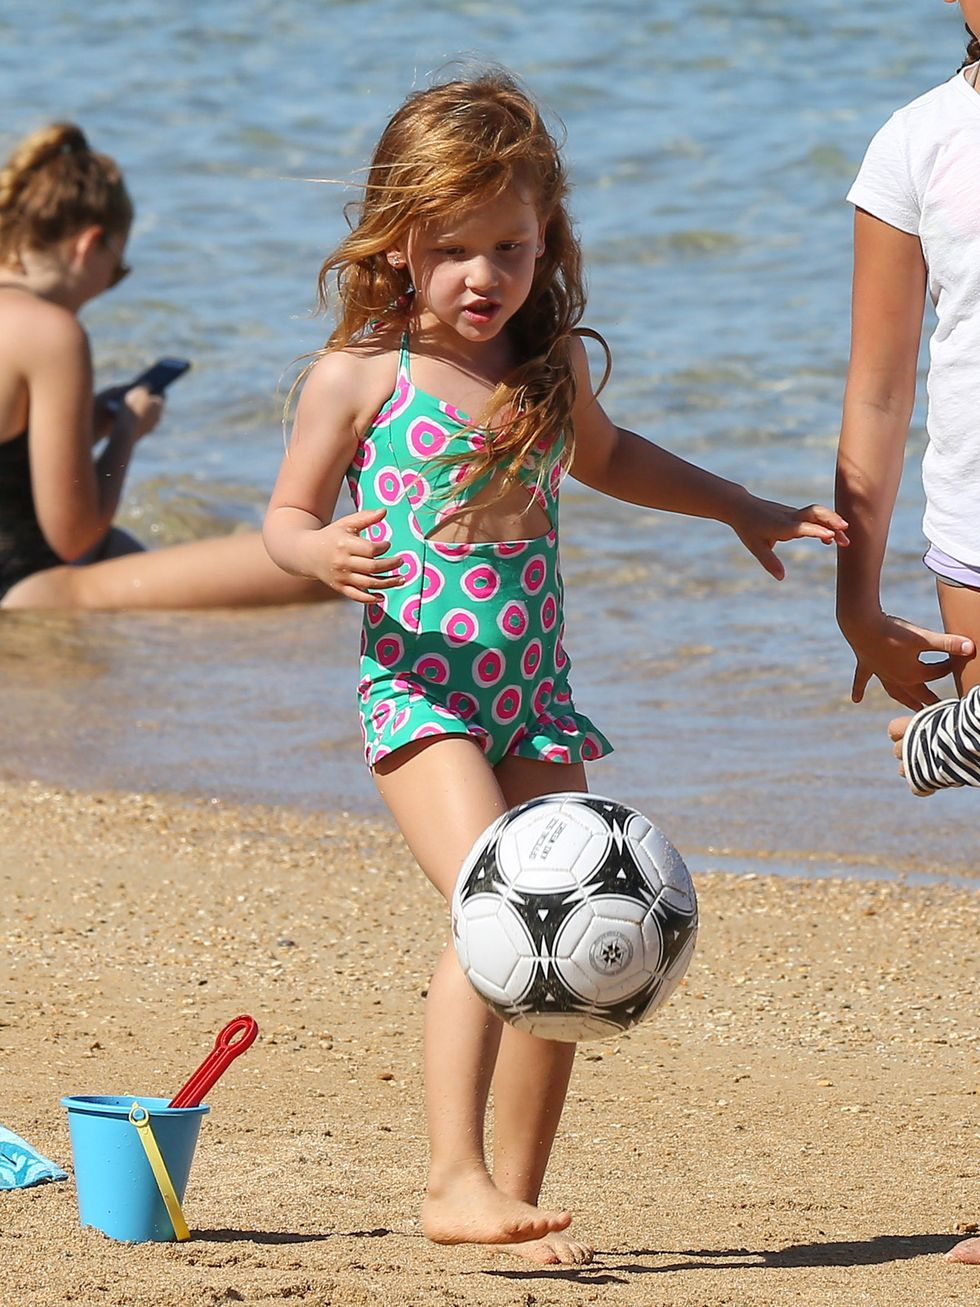 Arm, Fun, Ball, Football, Sports equipment, Human leg, Soccer ball, Summer, People in nature, People on beach, 